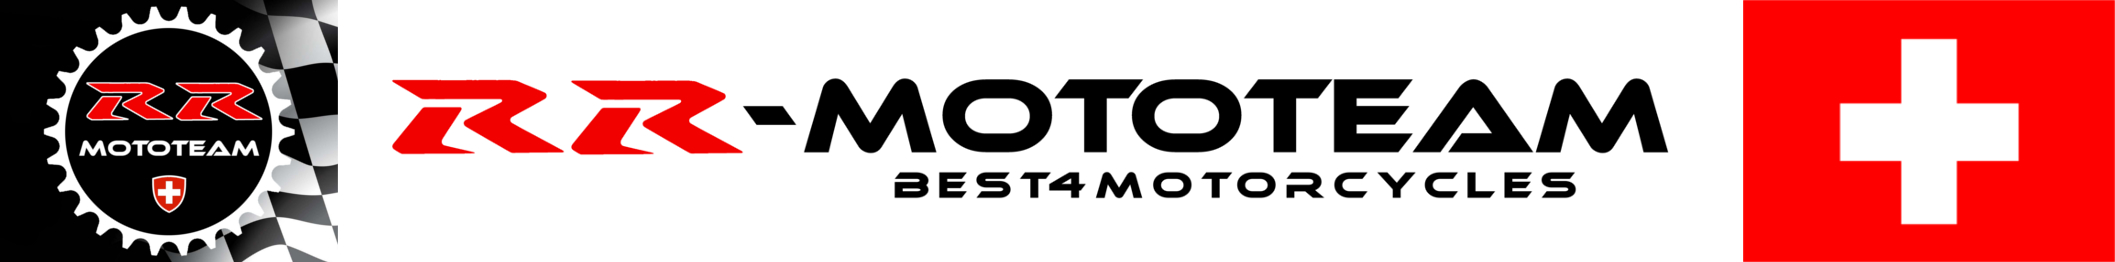 R+R MOTOTEAM GmbH